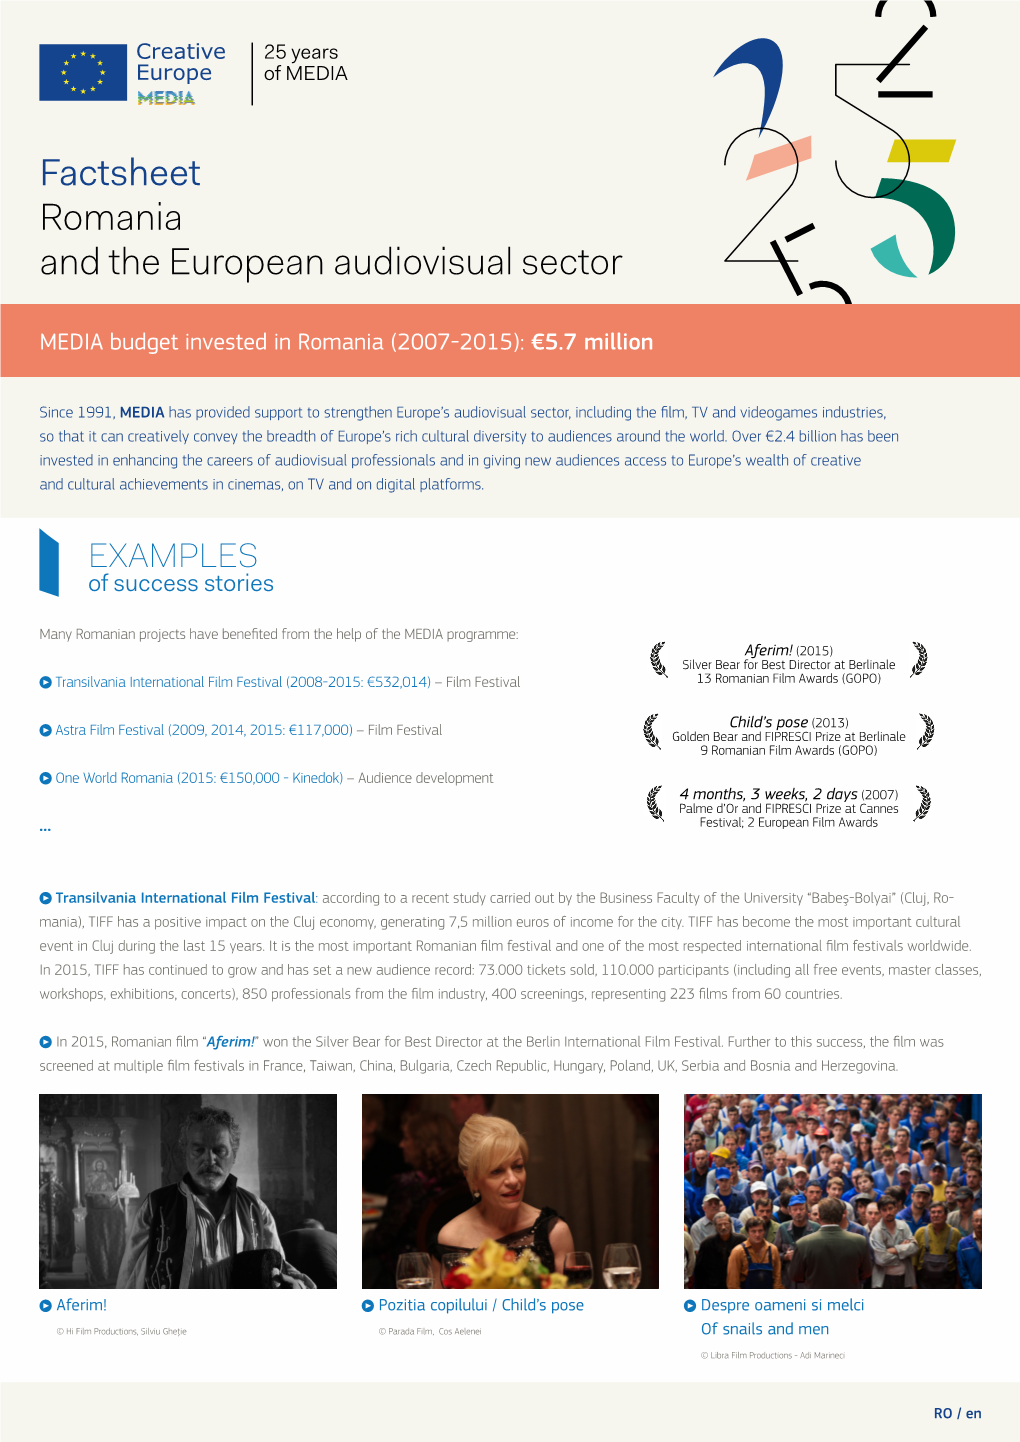 Factsheet Romania and the European Audiovisual Sector